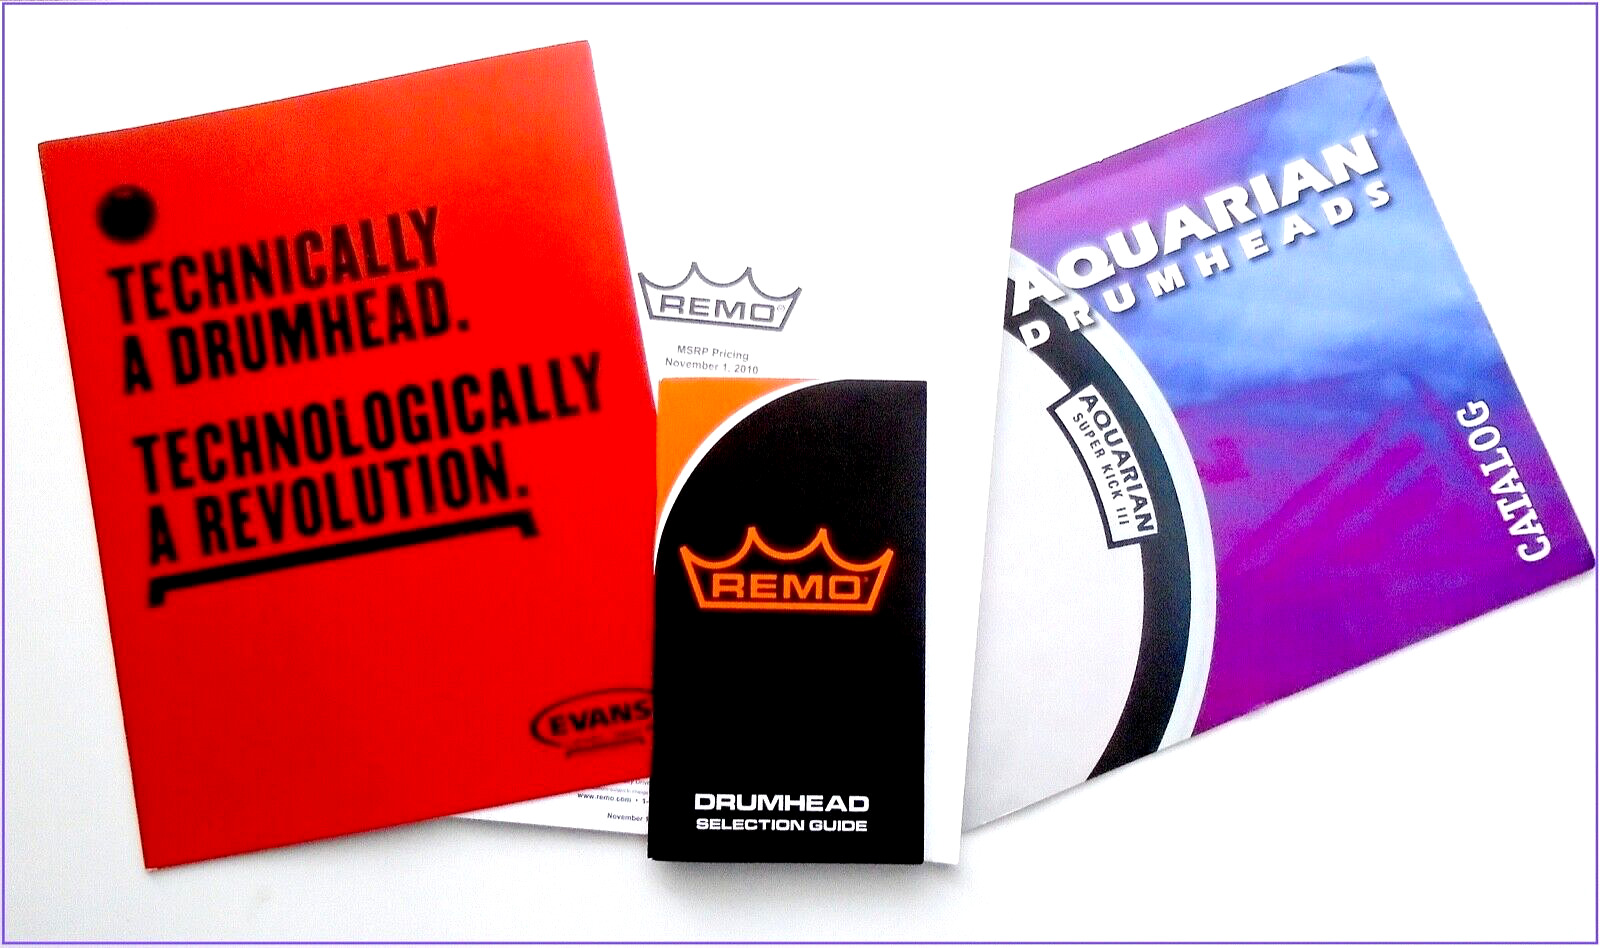 DRUMHEAD CATALOG LOT - Remo Evans Aquarian - Product Information Drum Brochures